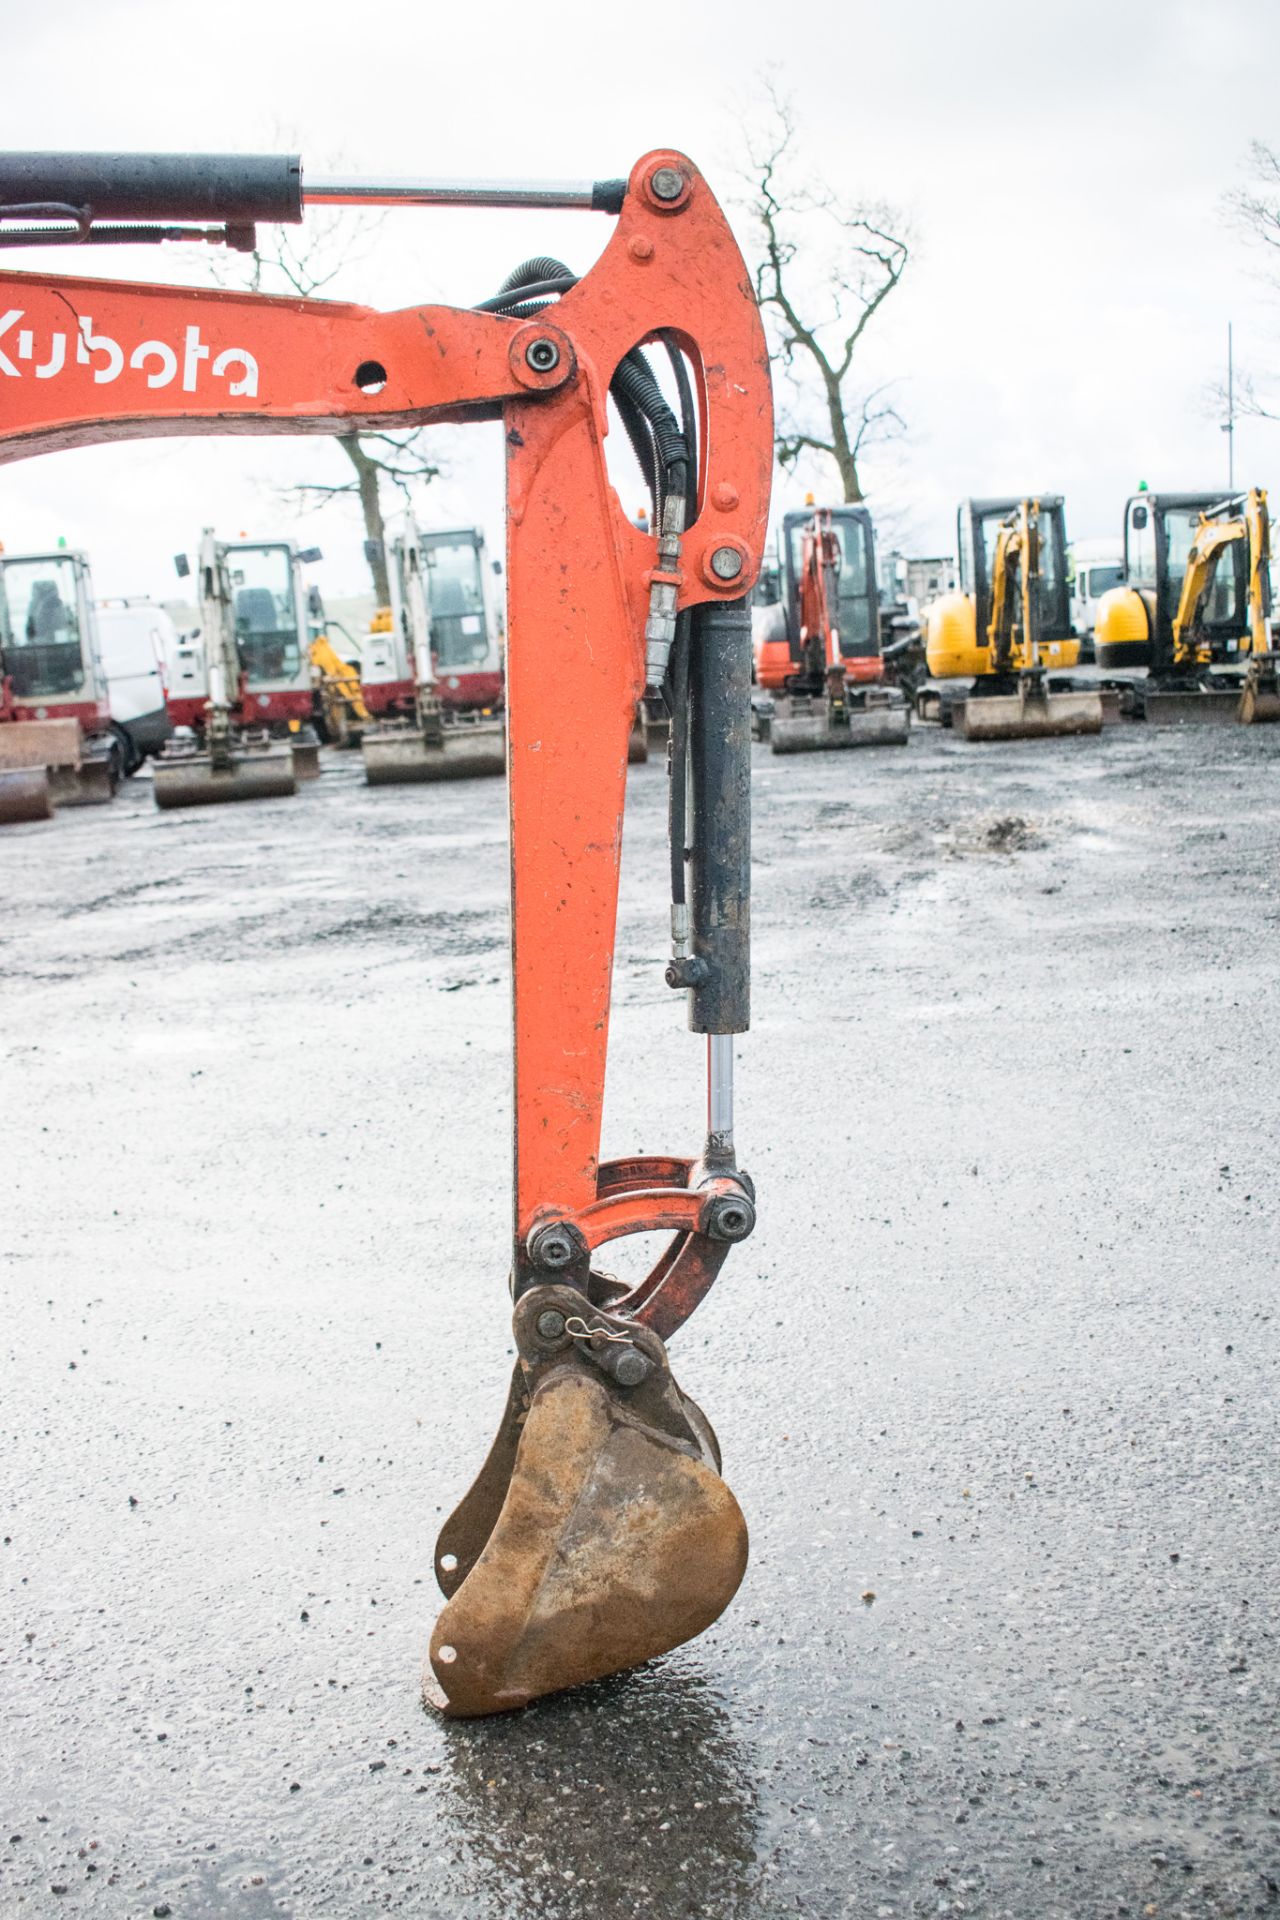 Kubota KX016.4 1.6 tonne rubber tracked mini excavator Year: 2014 S/N: 58172 Recorded hours: 1569 - Image 11 of 19